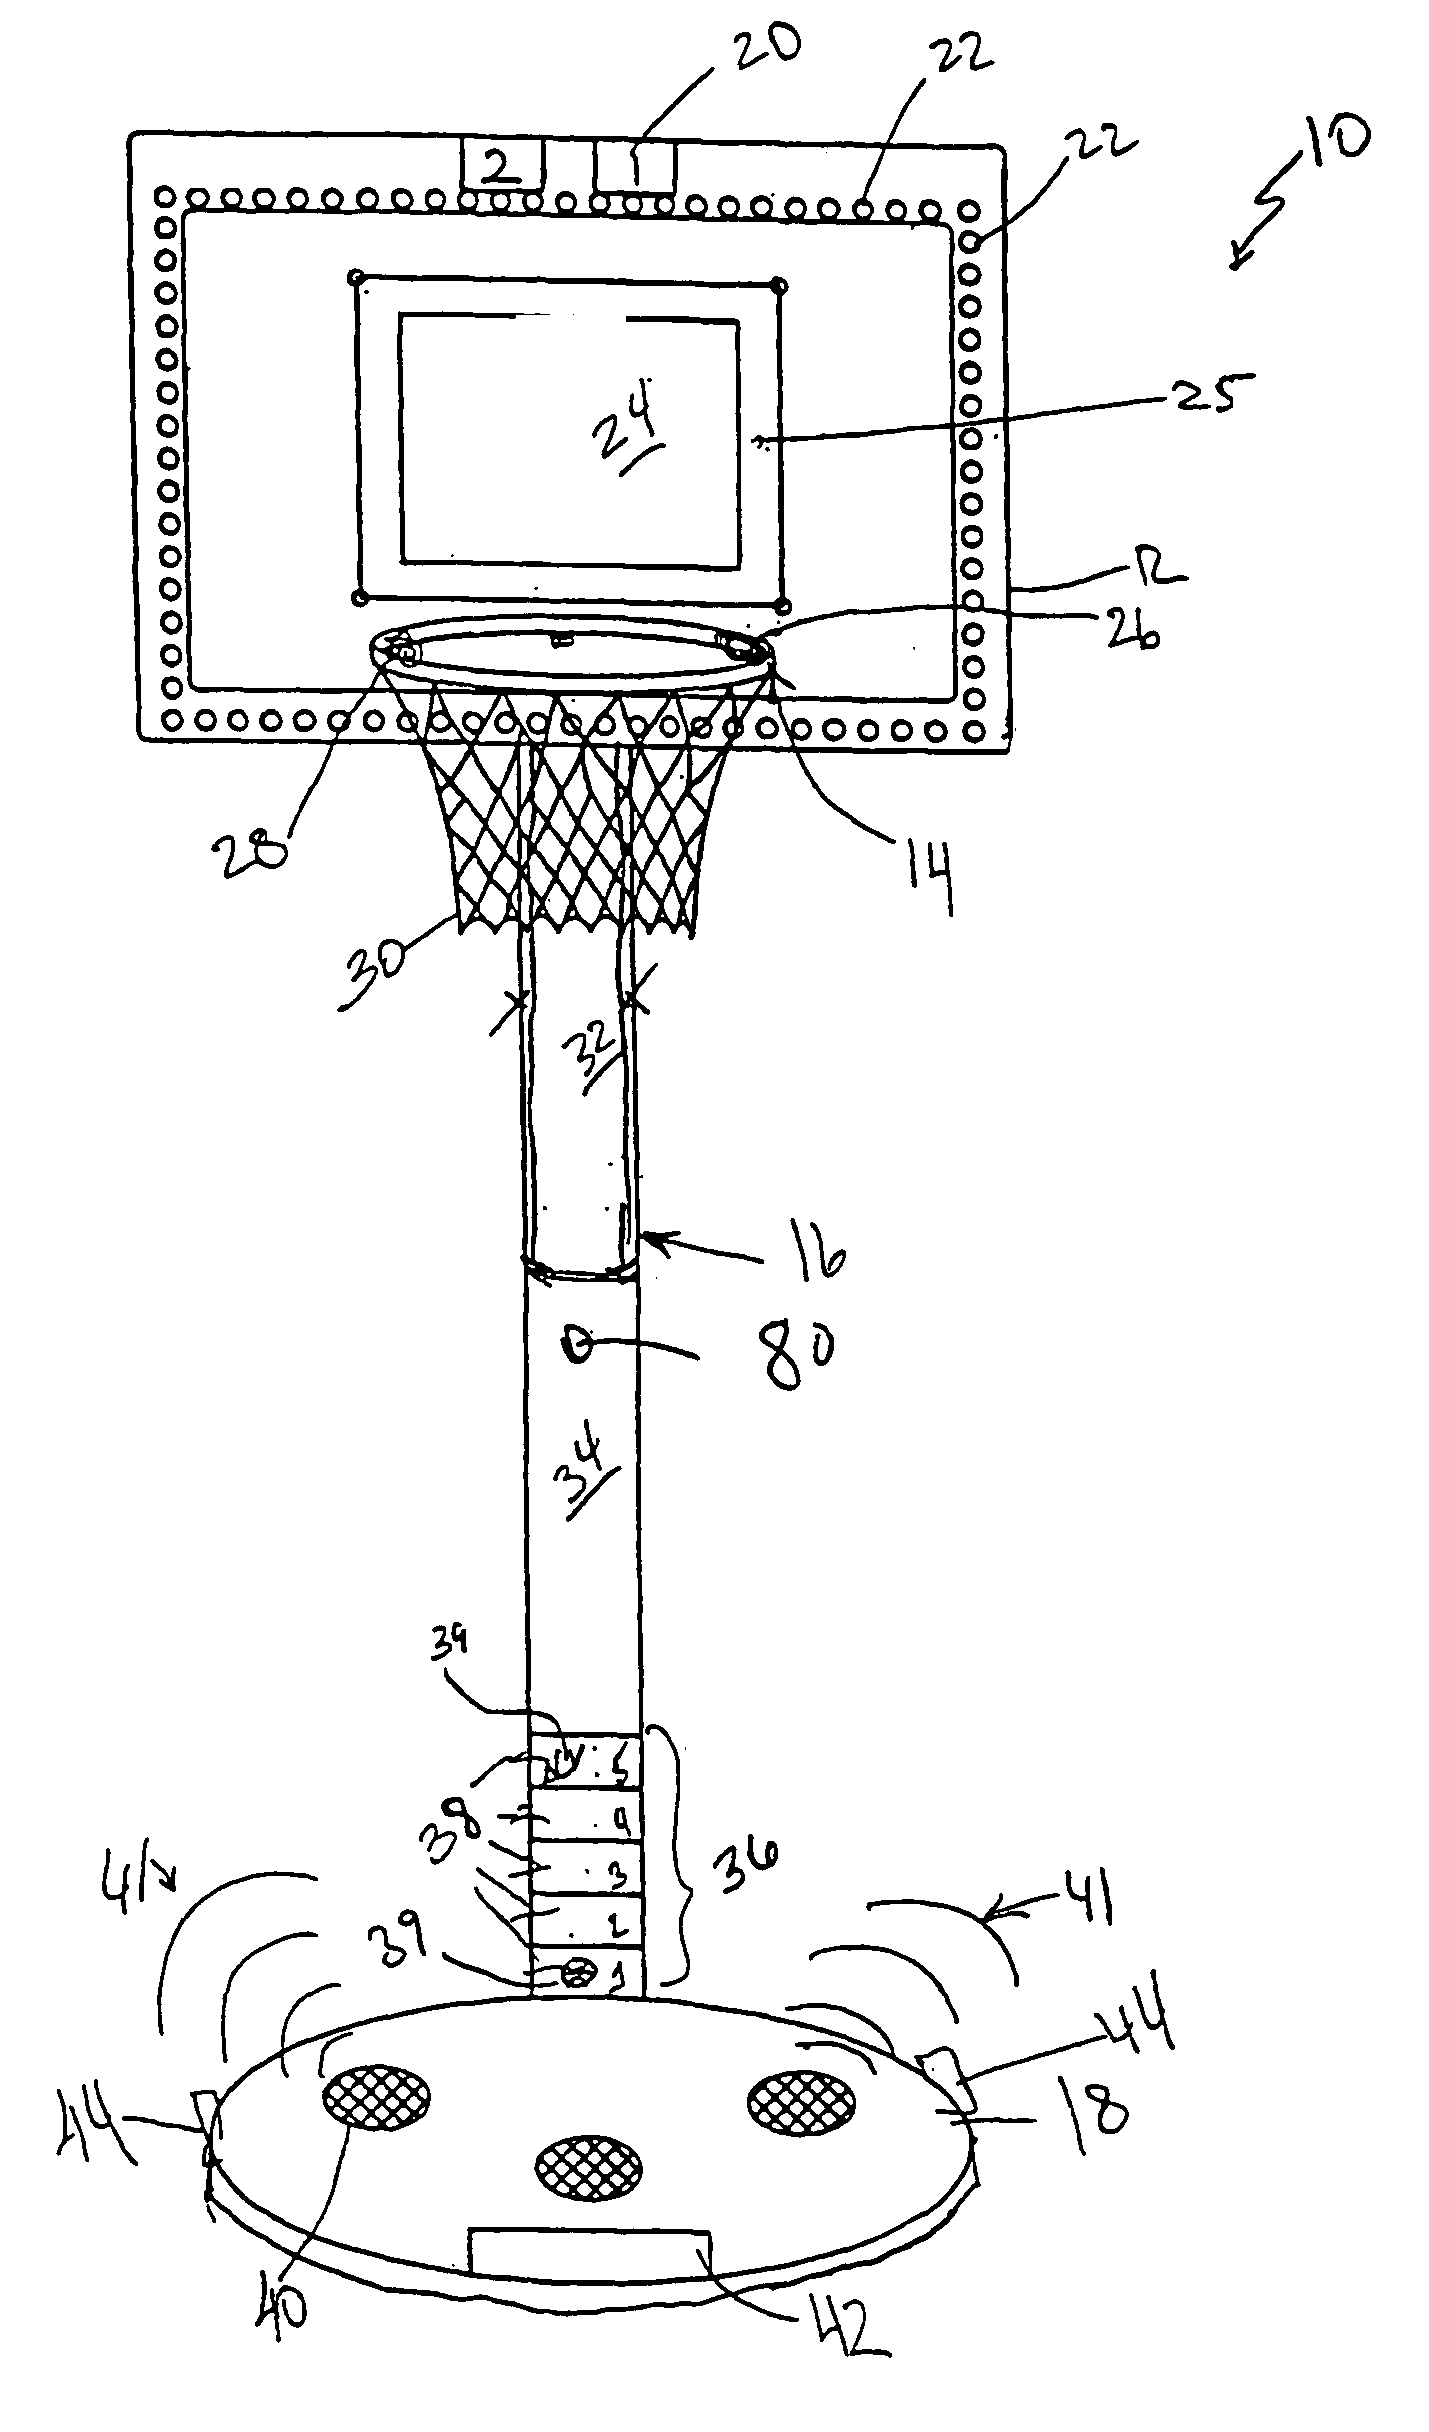 Educational basketball game device and method